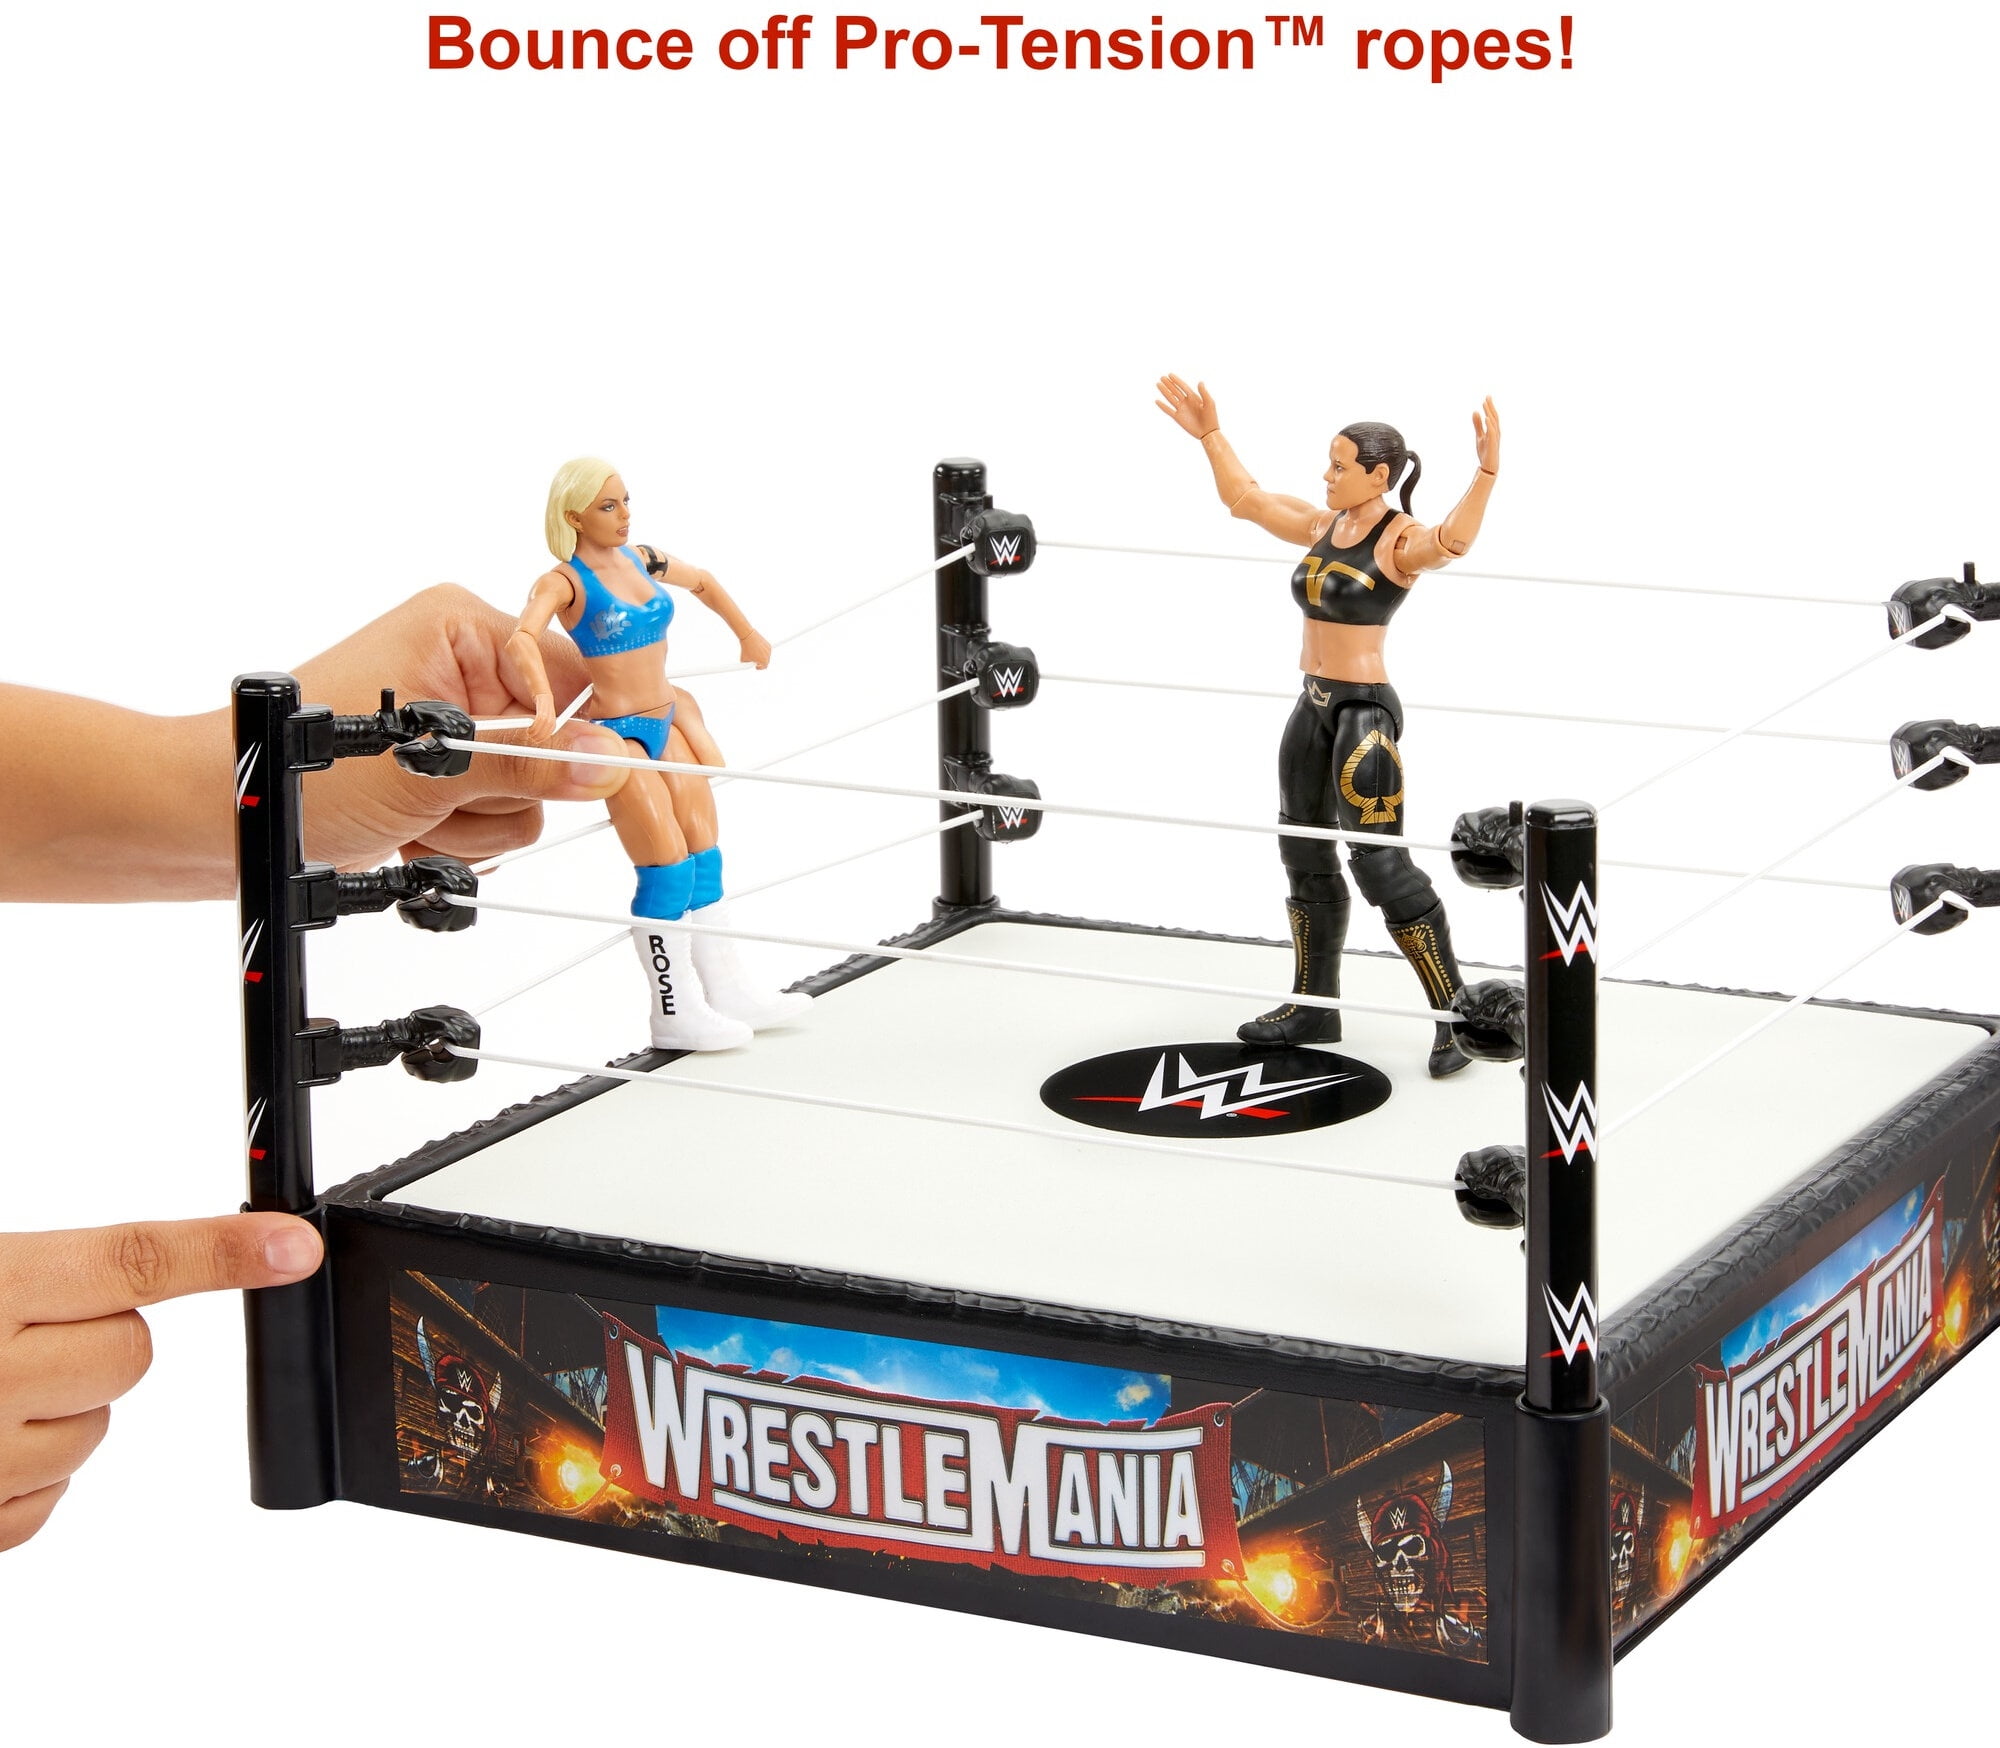 WWE Superstar Ring 2 Events in 1 Wrestlemania & Summerslam Mattel for sale online